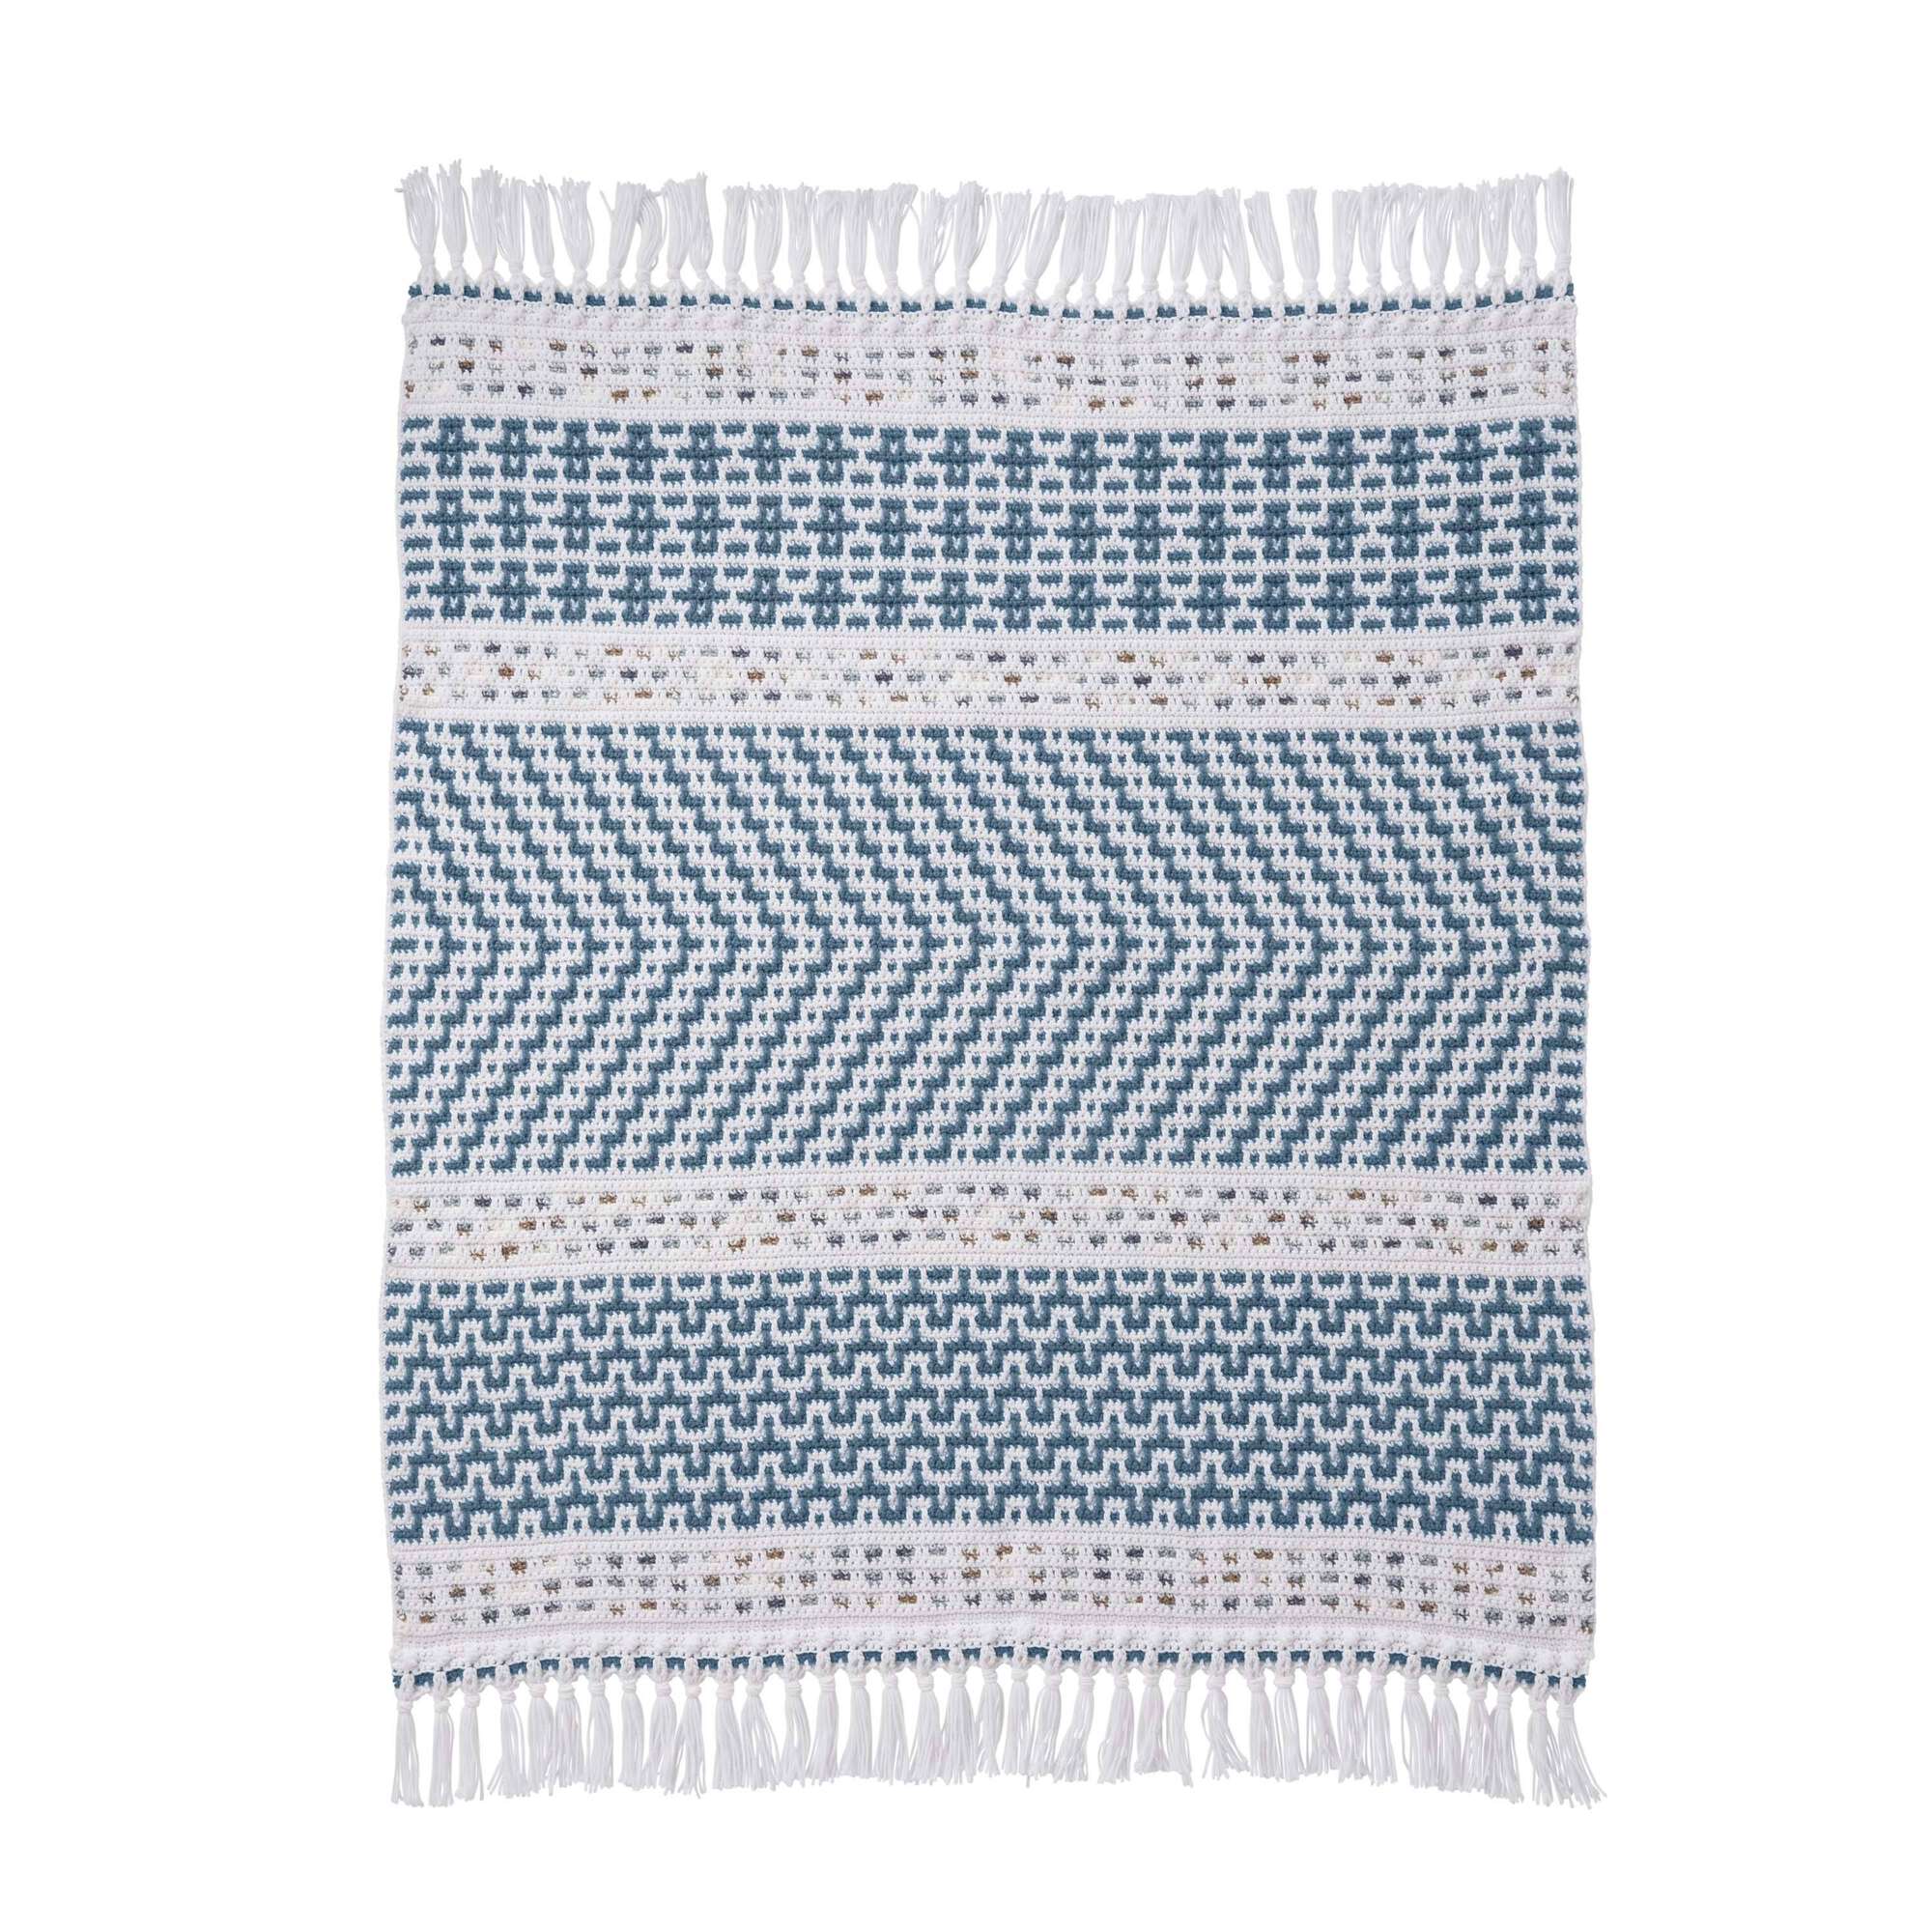 10 Free Mosaic Crochet Patterns For Beginners - Blue Star Crochet